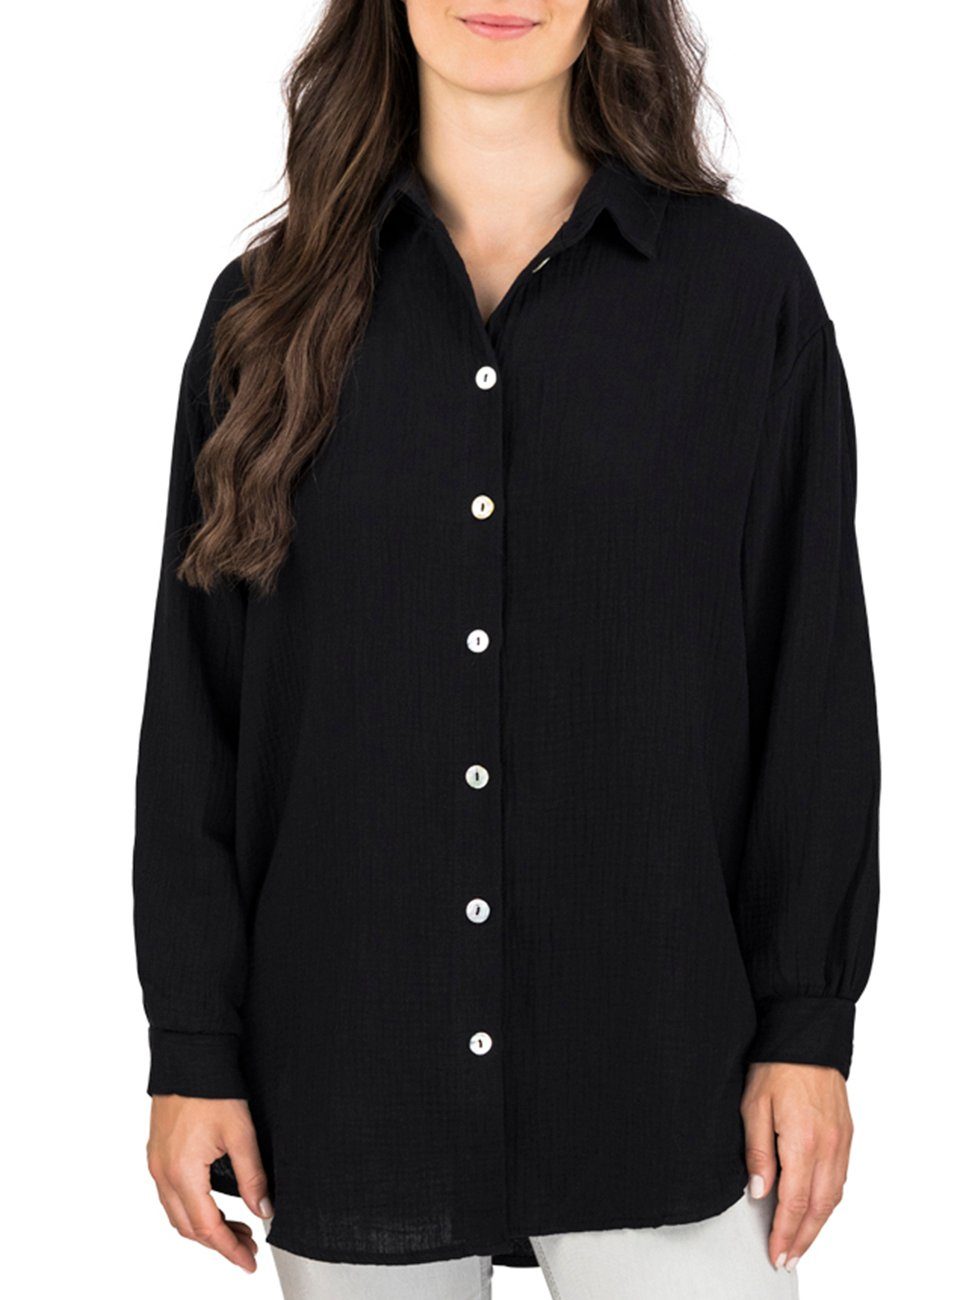 DENIMFY Hemdbluse Damen Bluse DFMathilda Oversize Fit Basic Musselin Hemd aus 100% Baumwolle Black (64000)